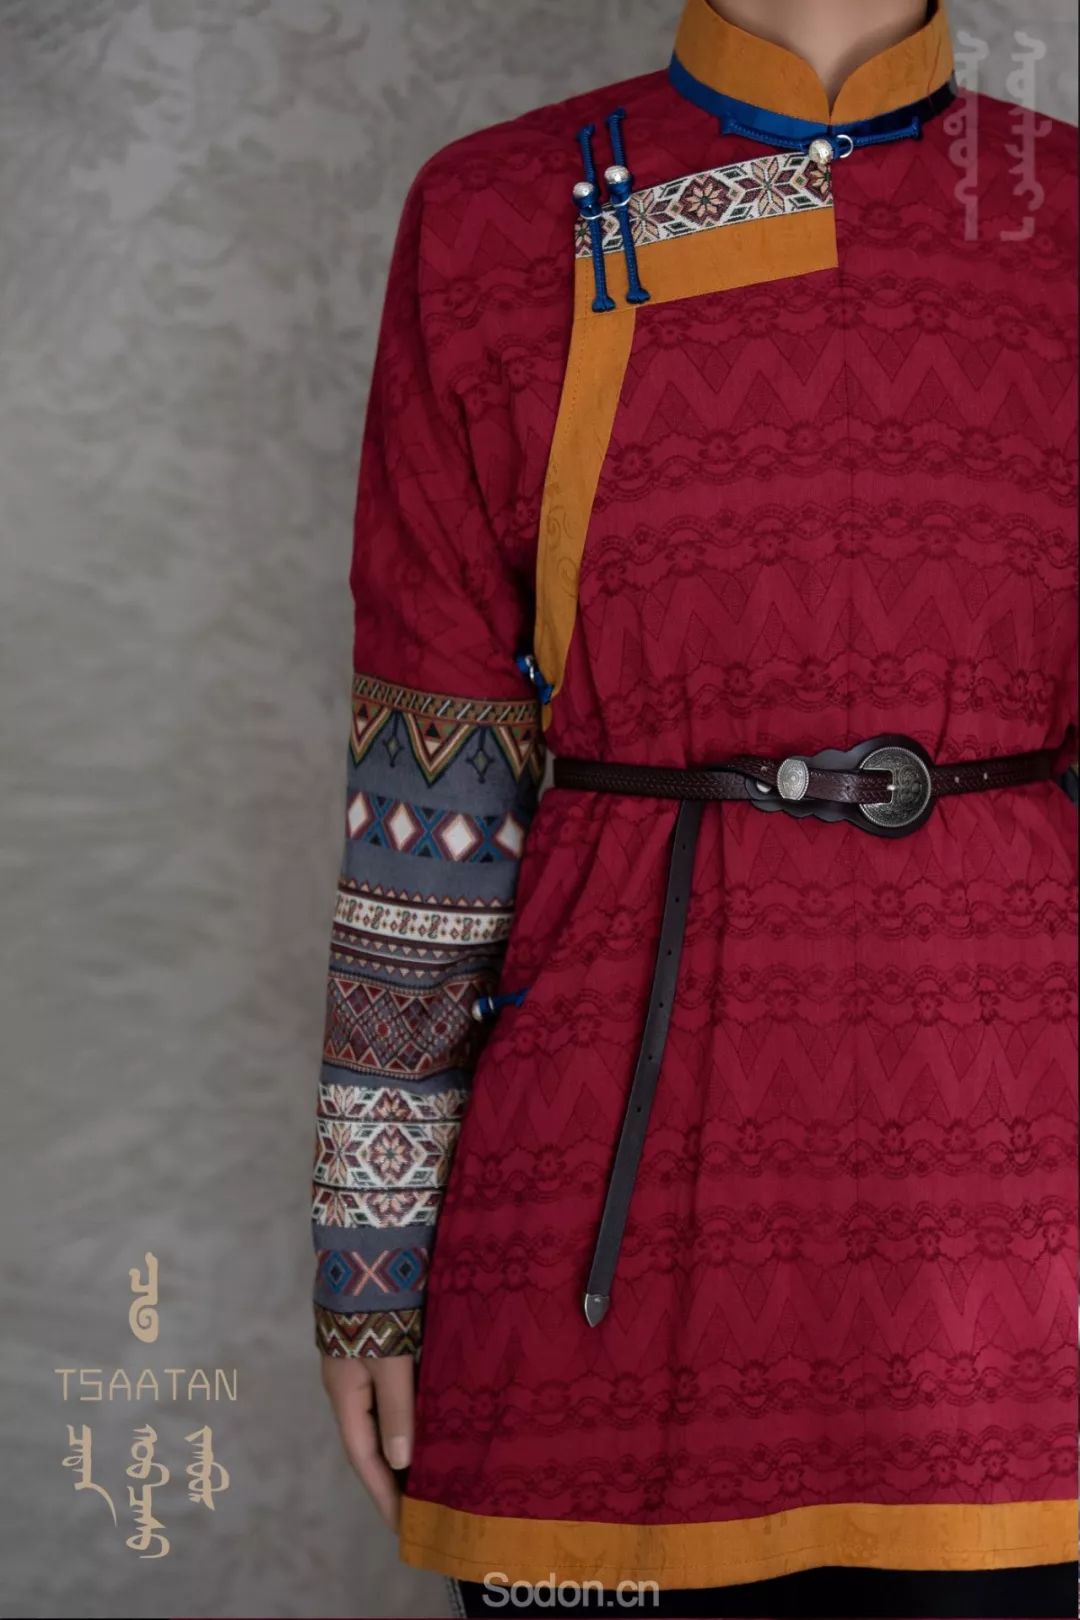 TSAATAN蒙古时装 2019夏季新款首发 第64张